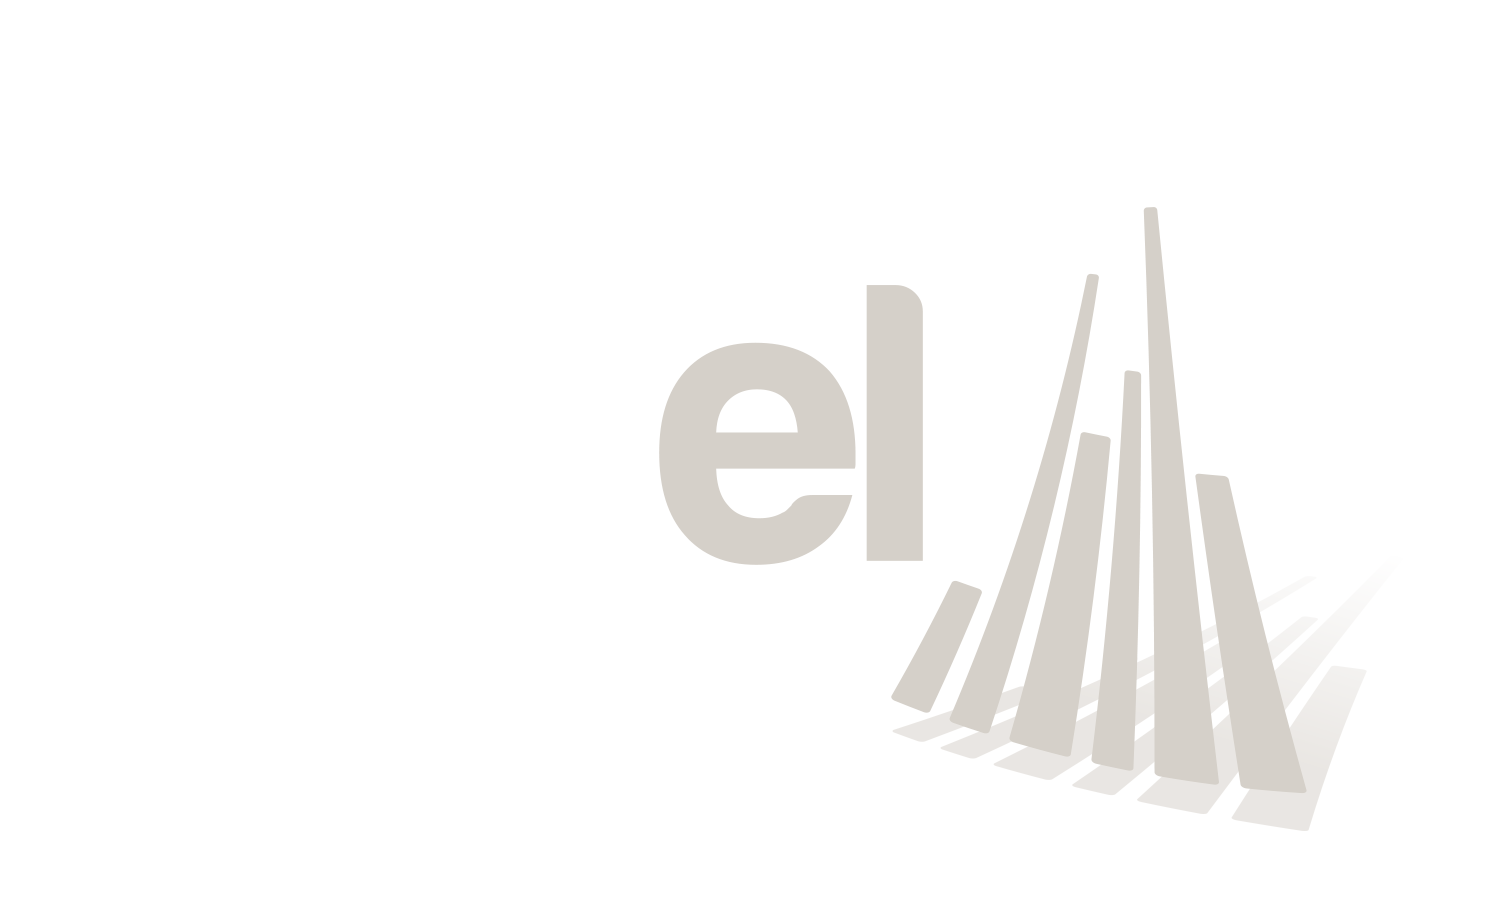 Partel-logo-grey-white-vector-s